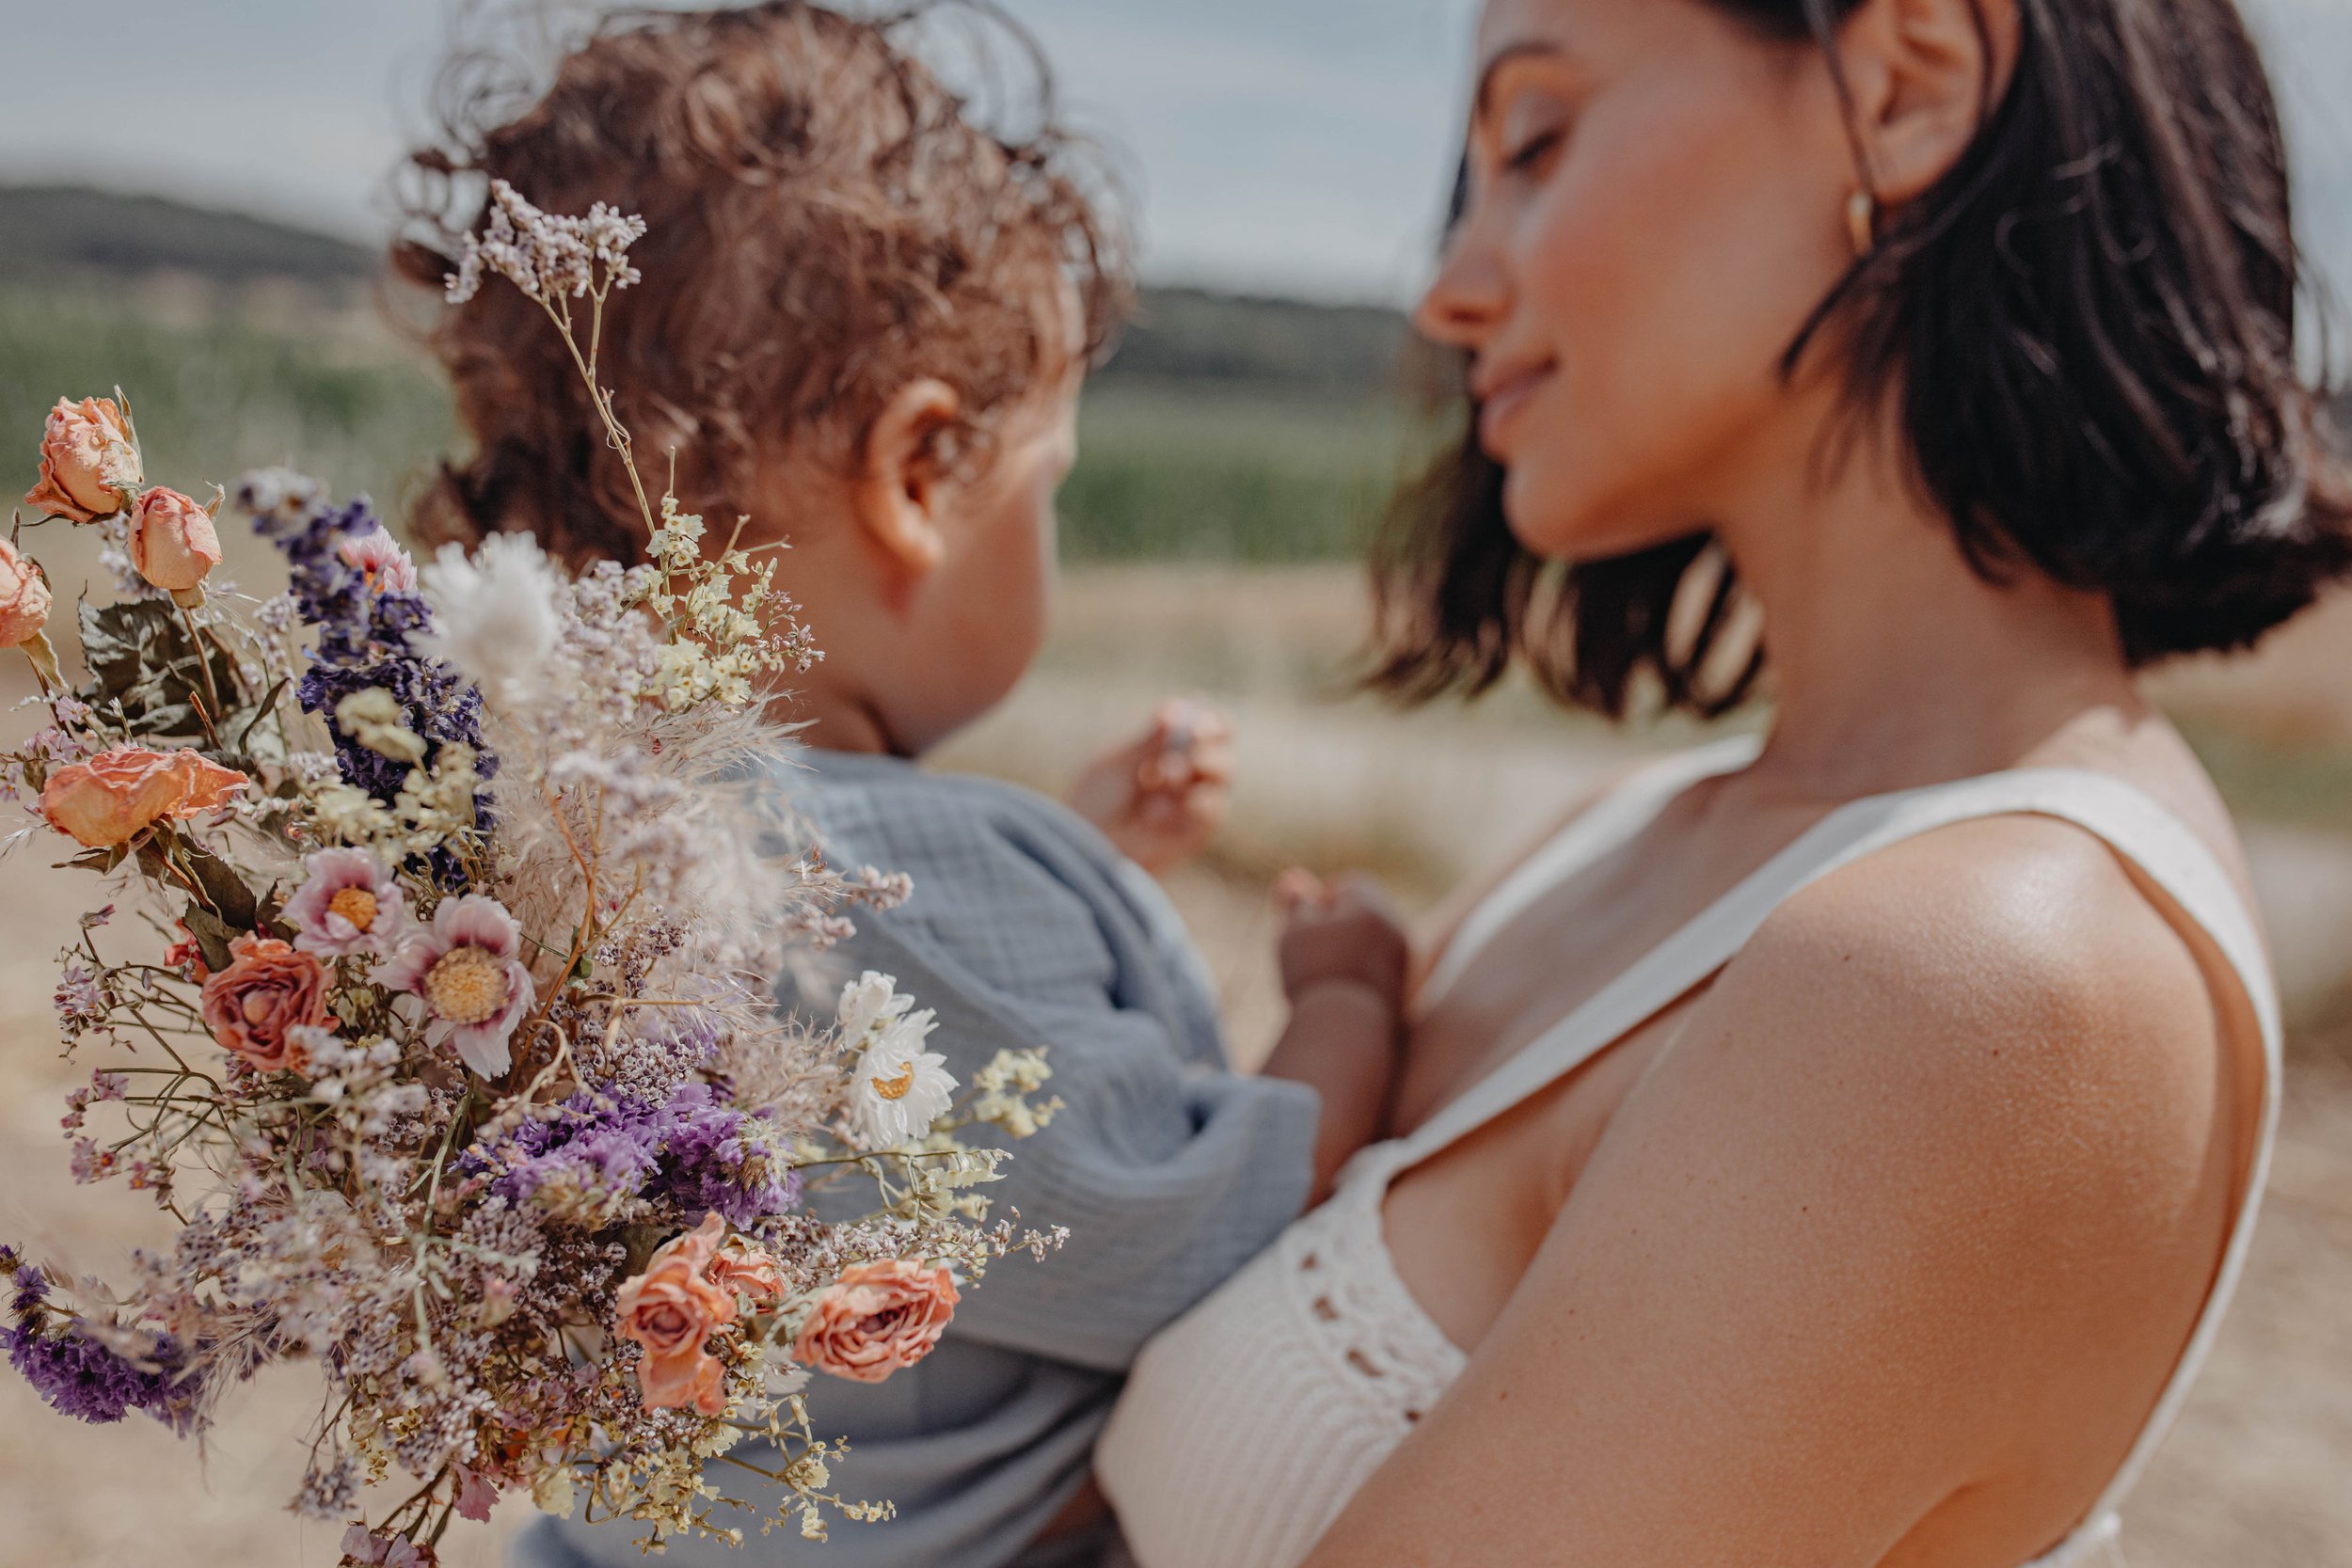 motherhood children connection breastfeeding.jpg